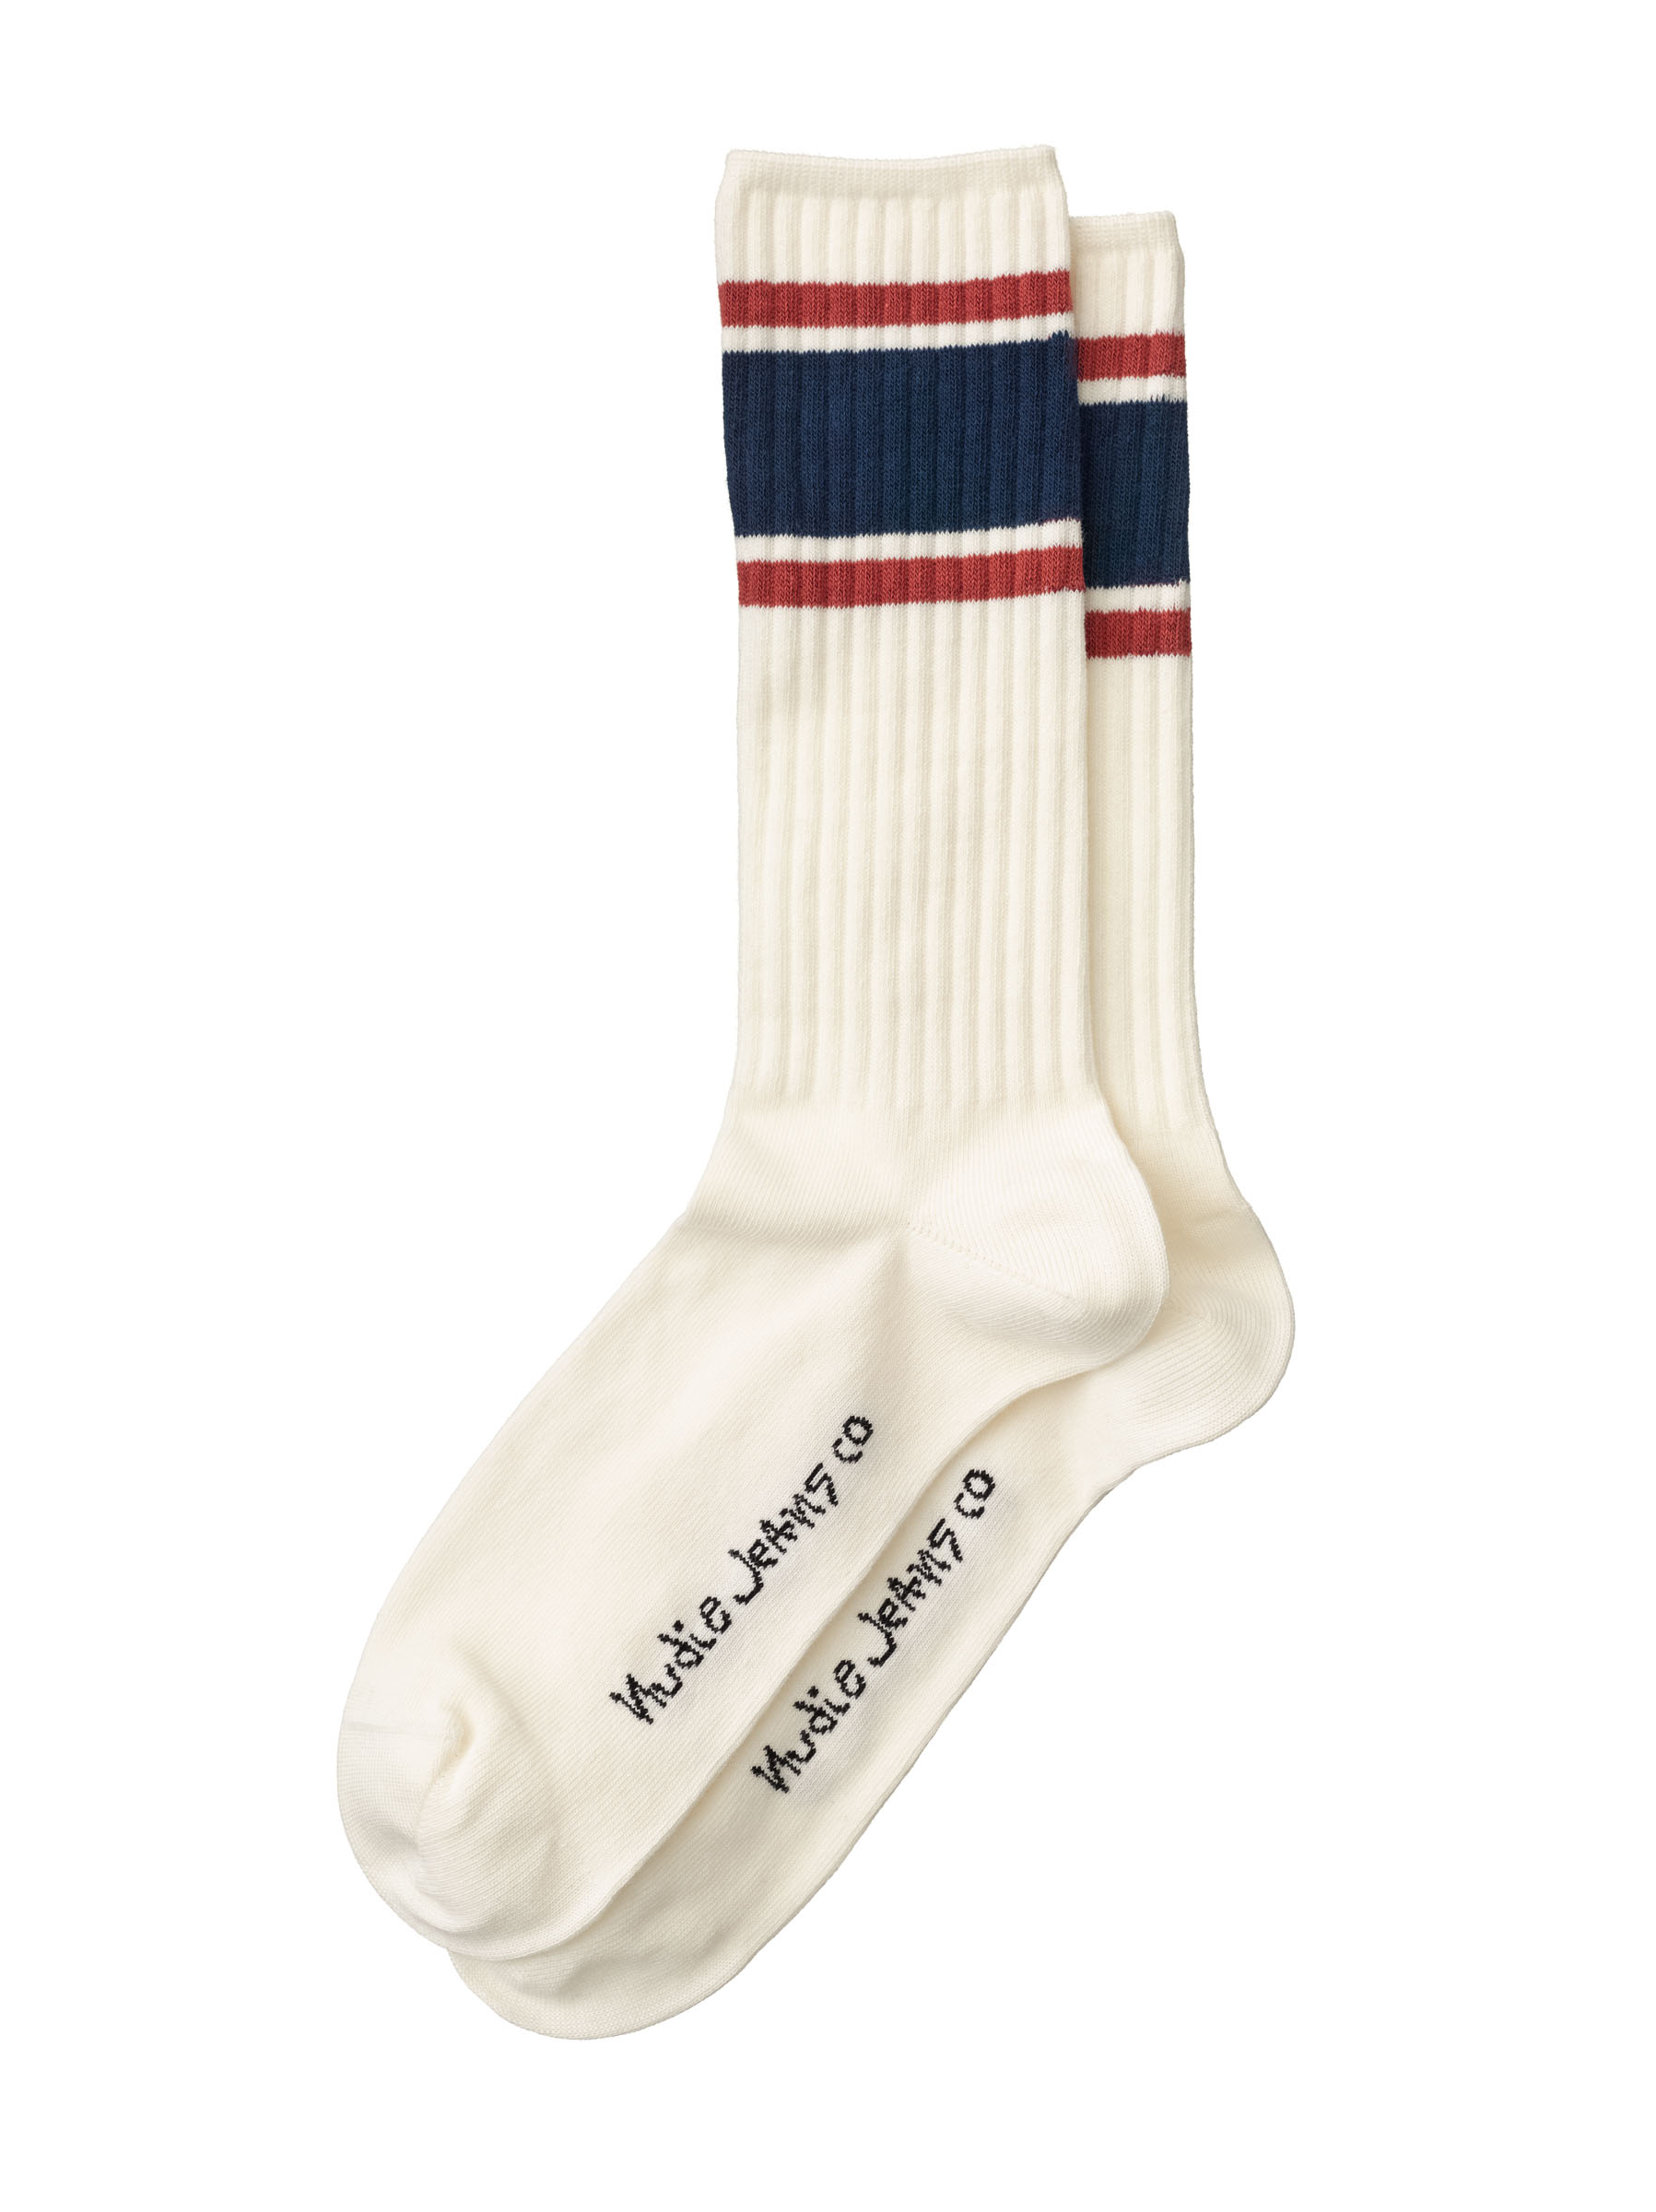 Amundsson Sport Socks blue